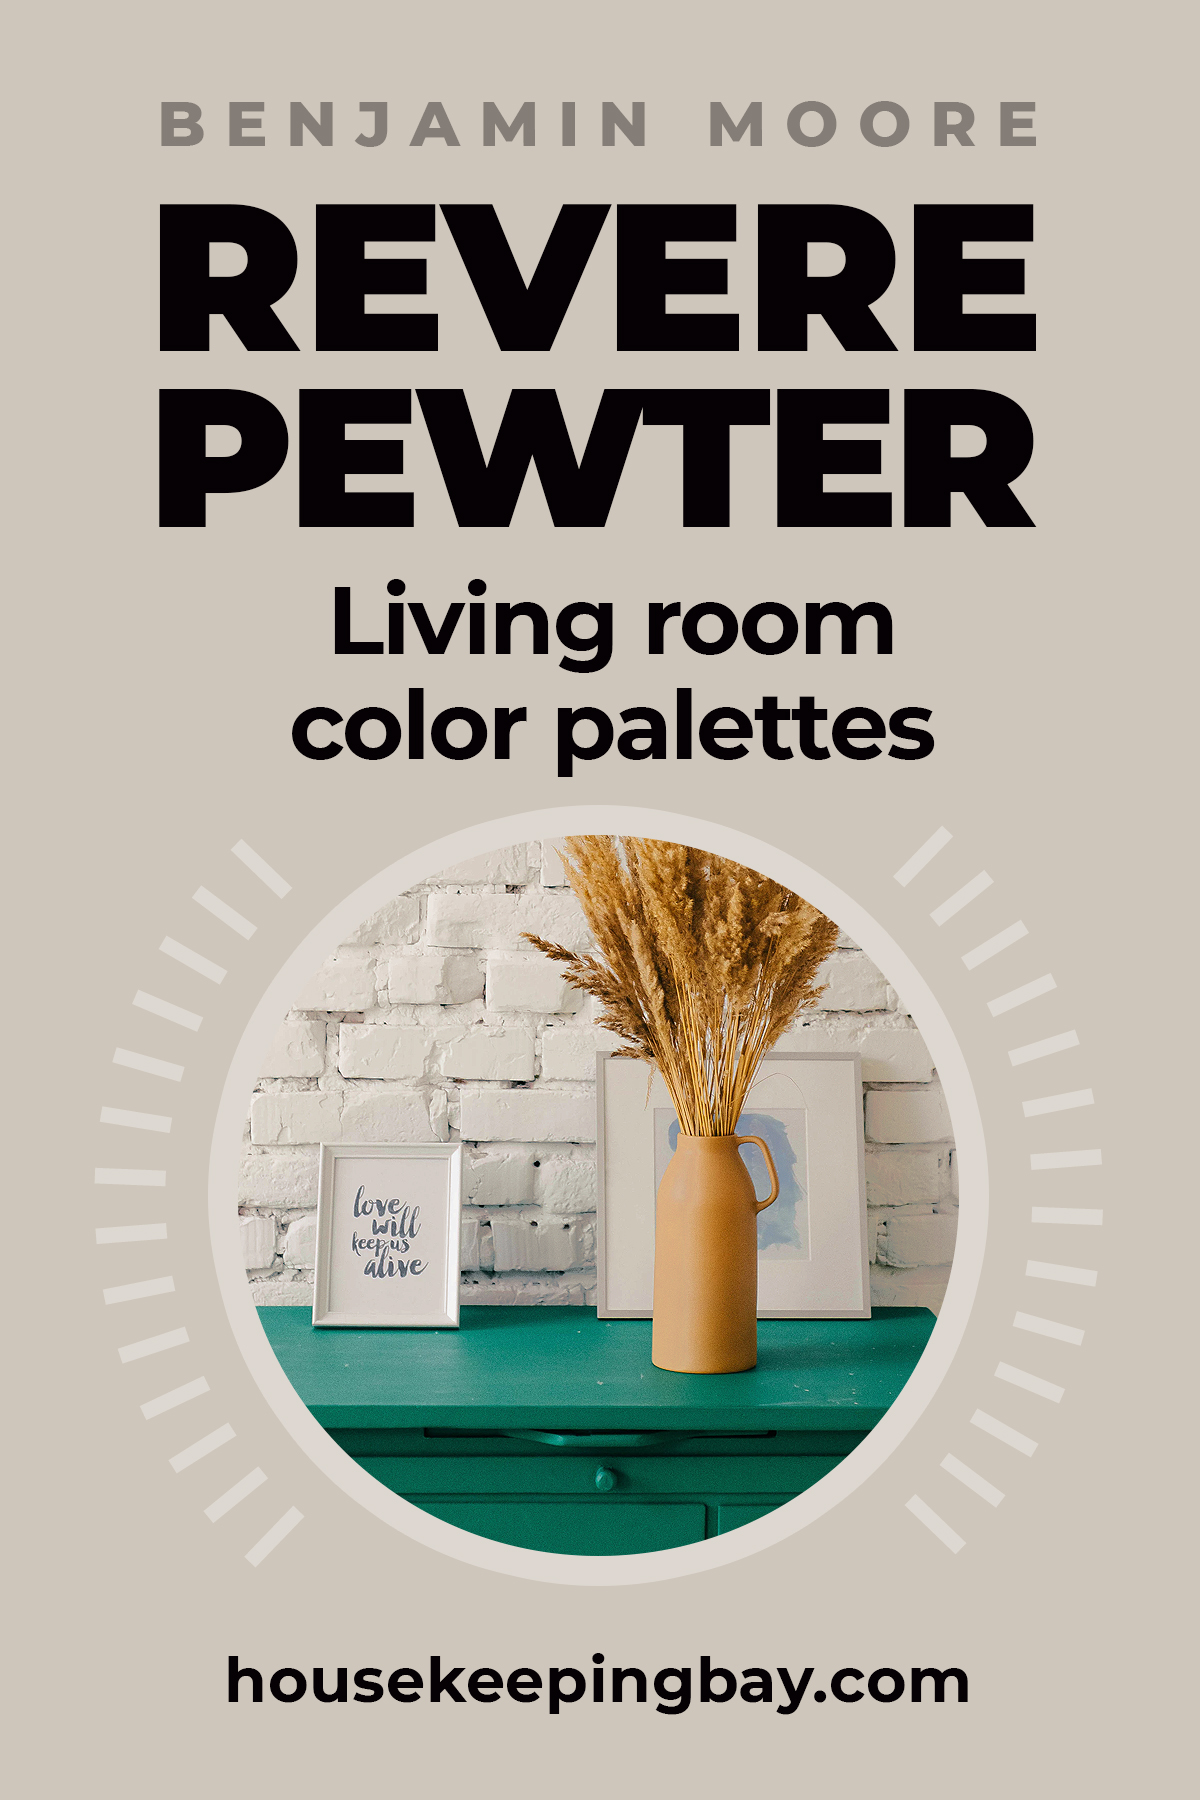 Revere pewter living room color palettes